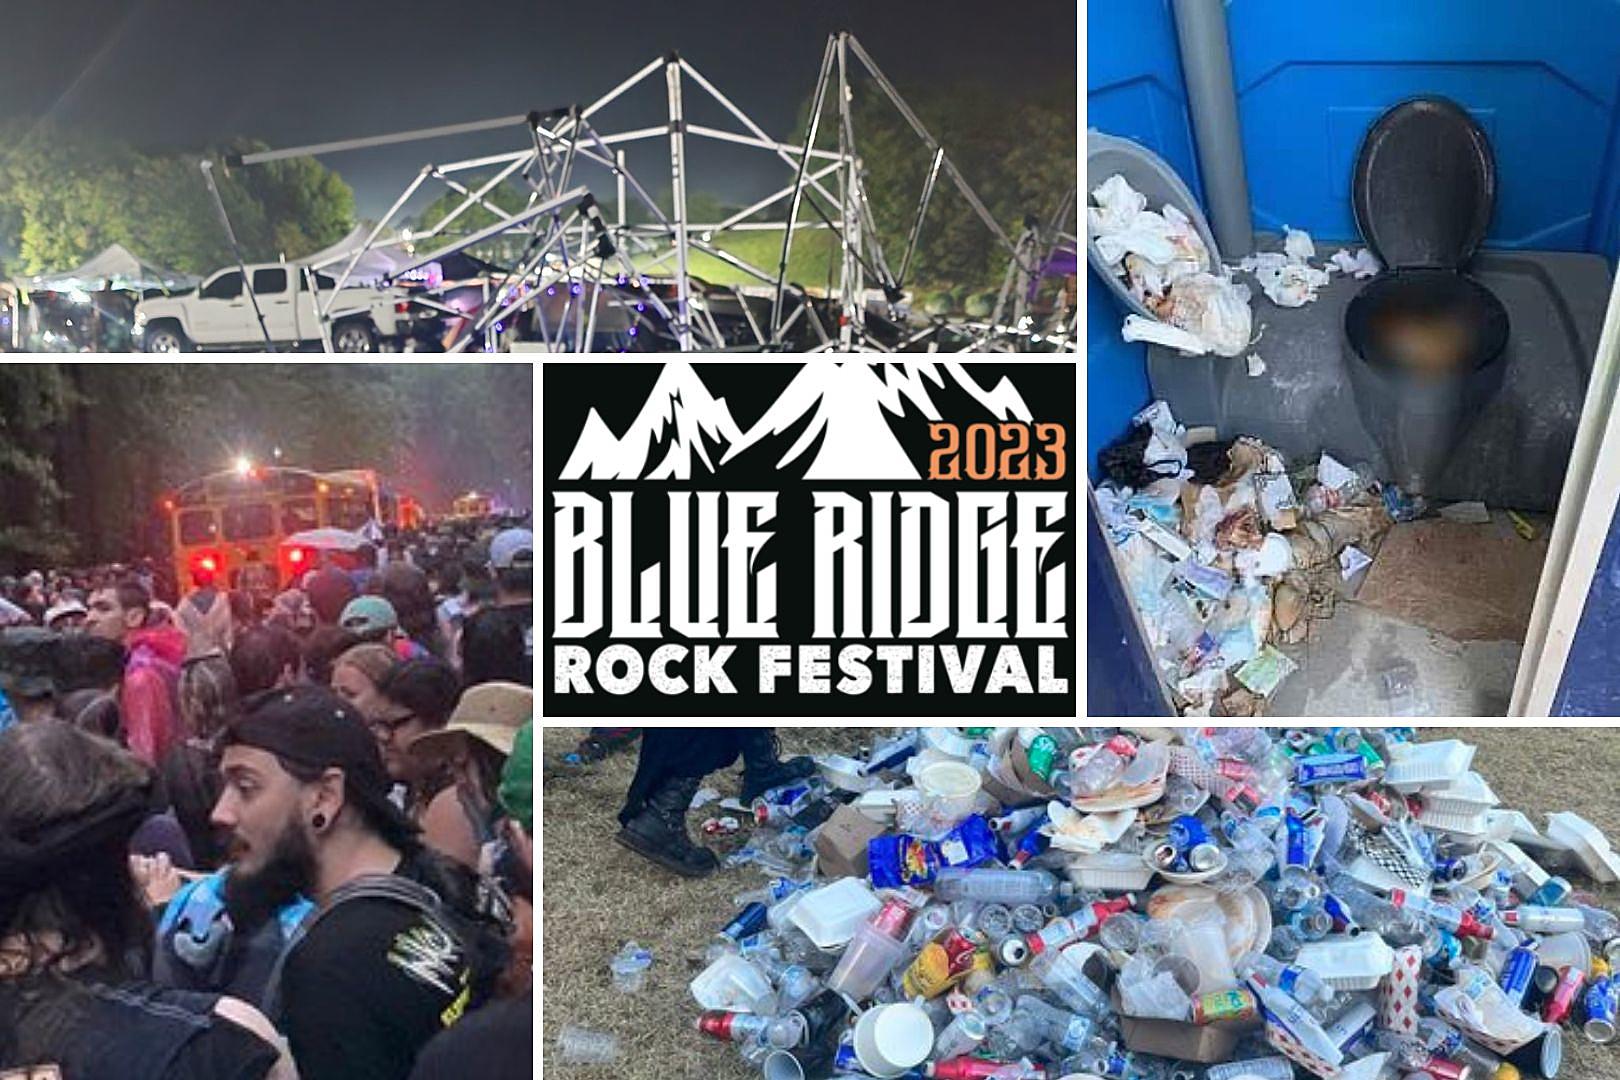 Sexyfuckinggirlsvideo - Photos + Video - Fans Document Disastrous Blue Ridge Rock Fest